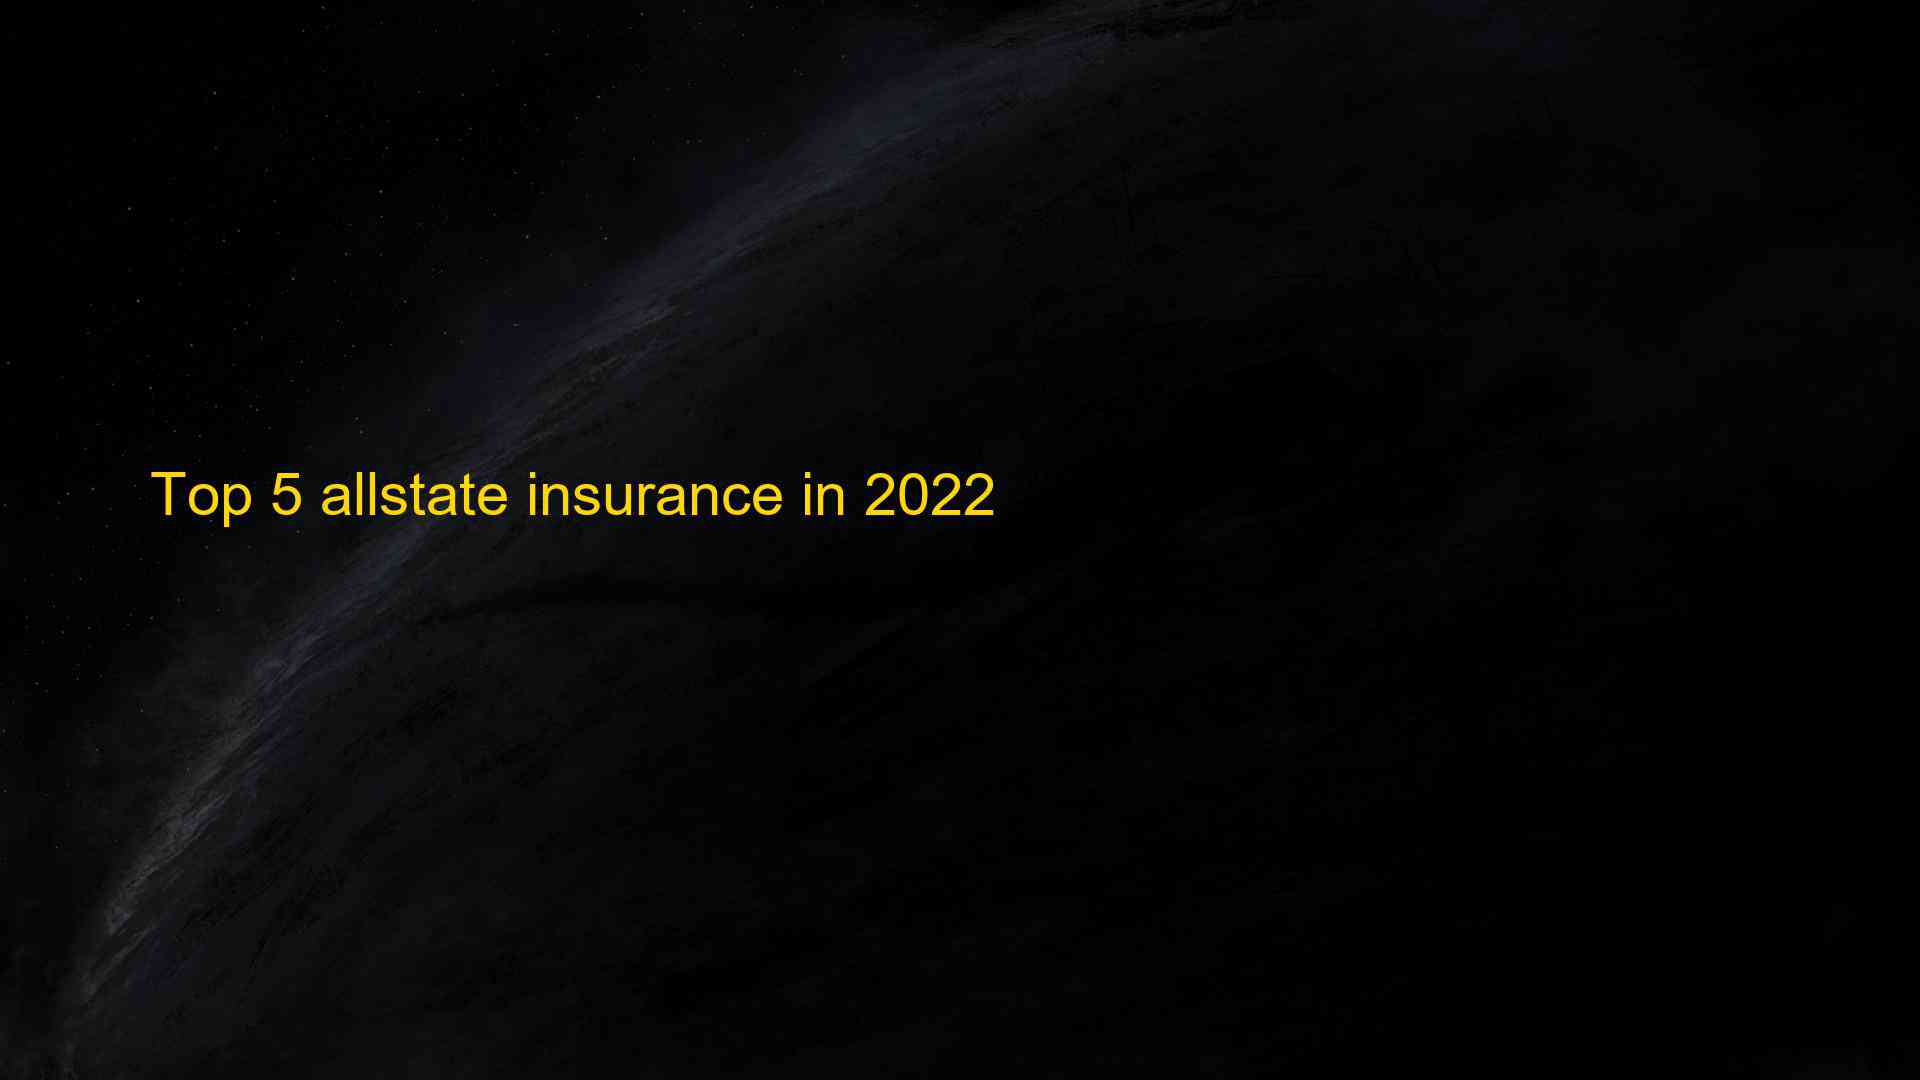 Top 5 allstate insurance in 2022 1660256963